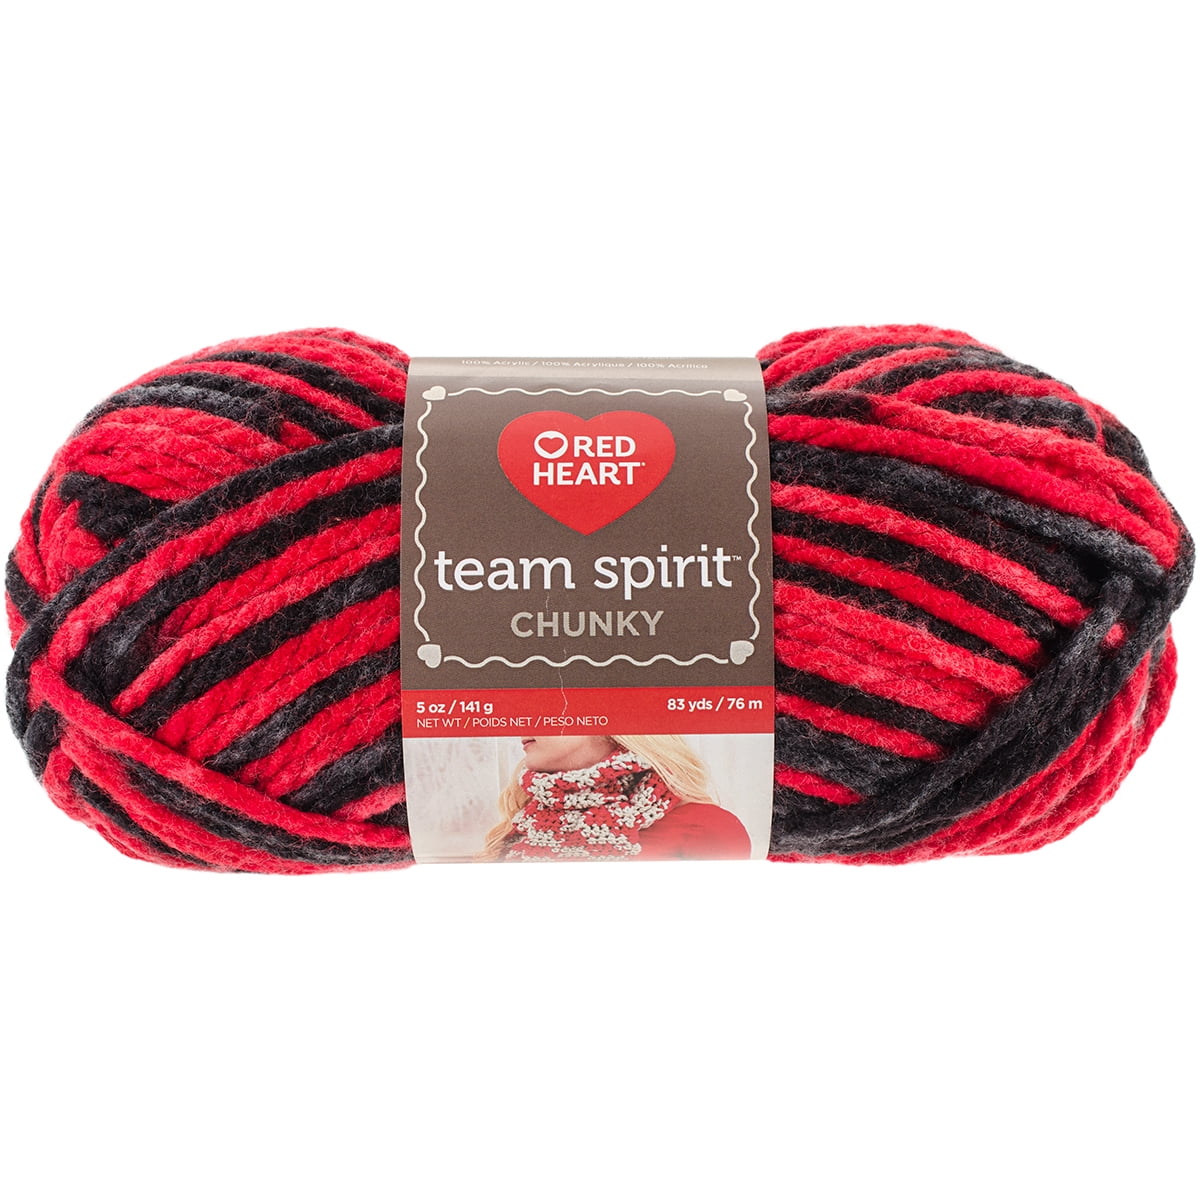 Red Heart Team Spirit Purple & Gold Knitting and Crochet Yarn